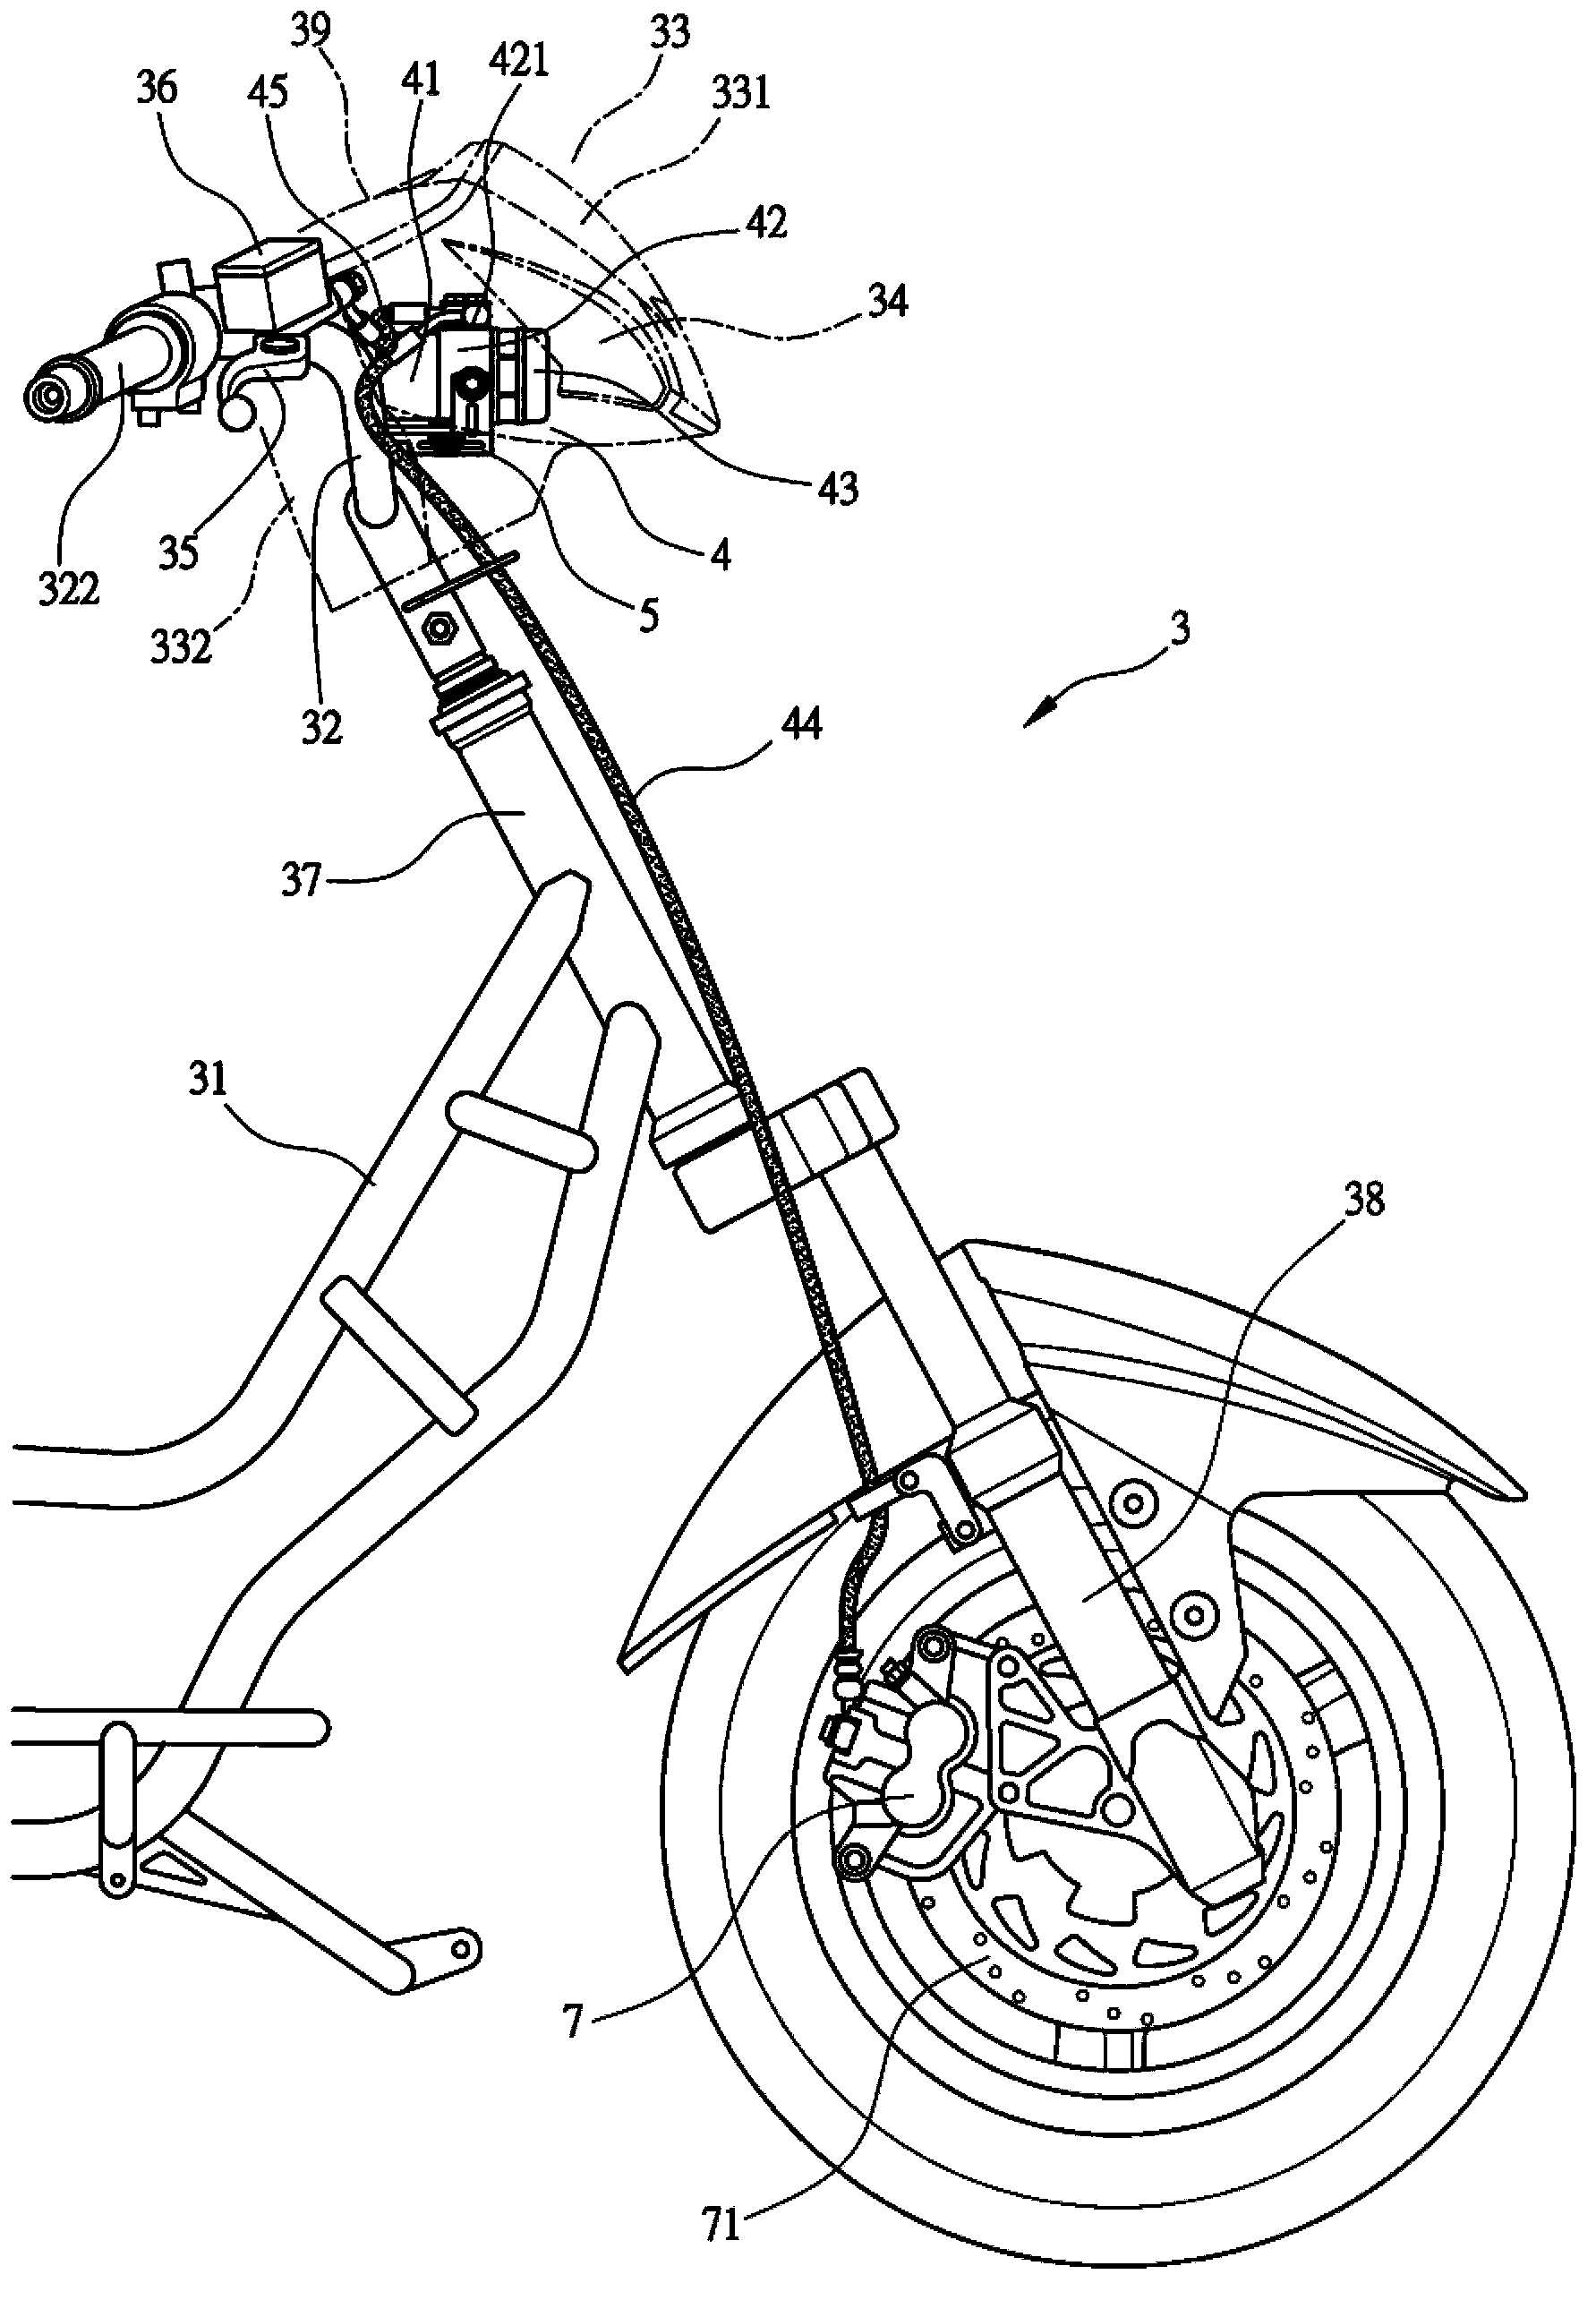 Motorcycle antiskid brake system structure